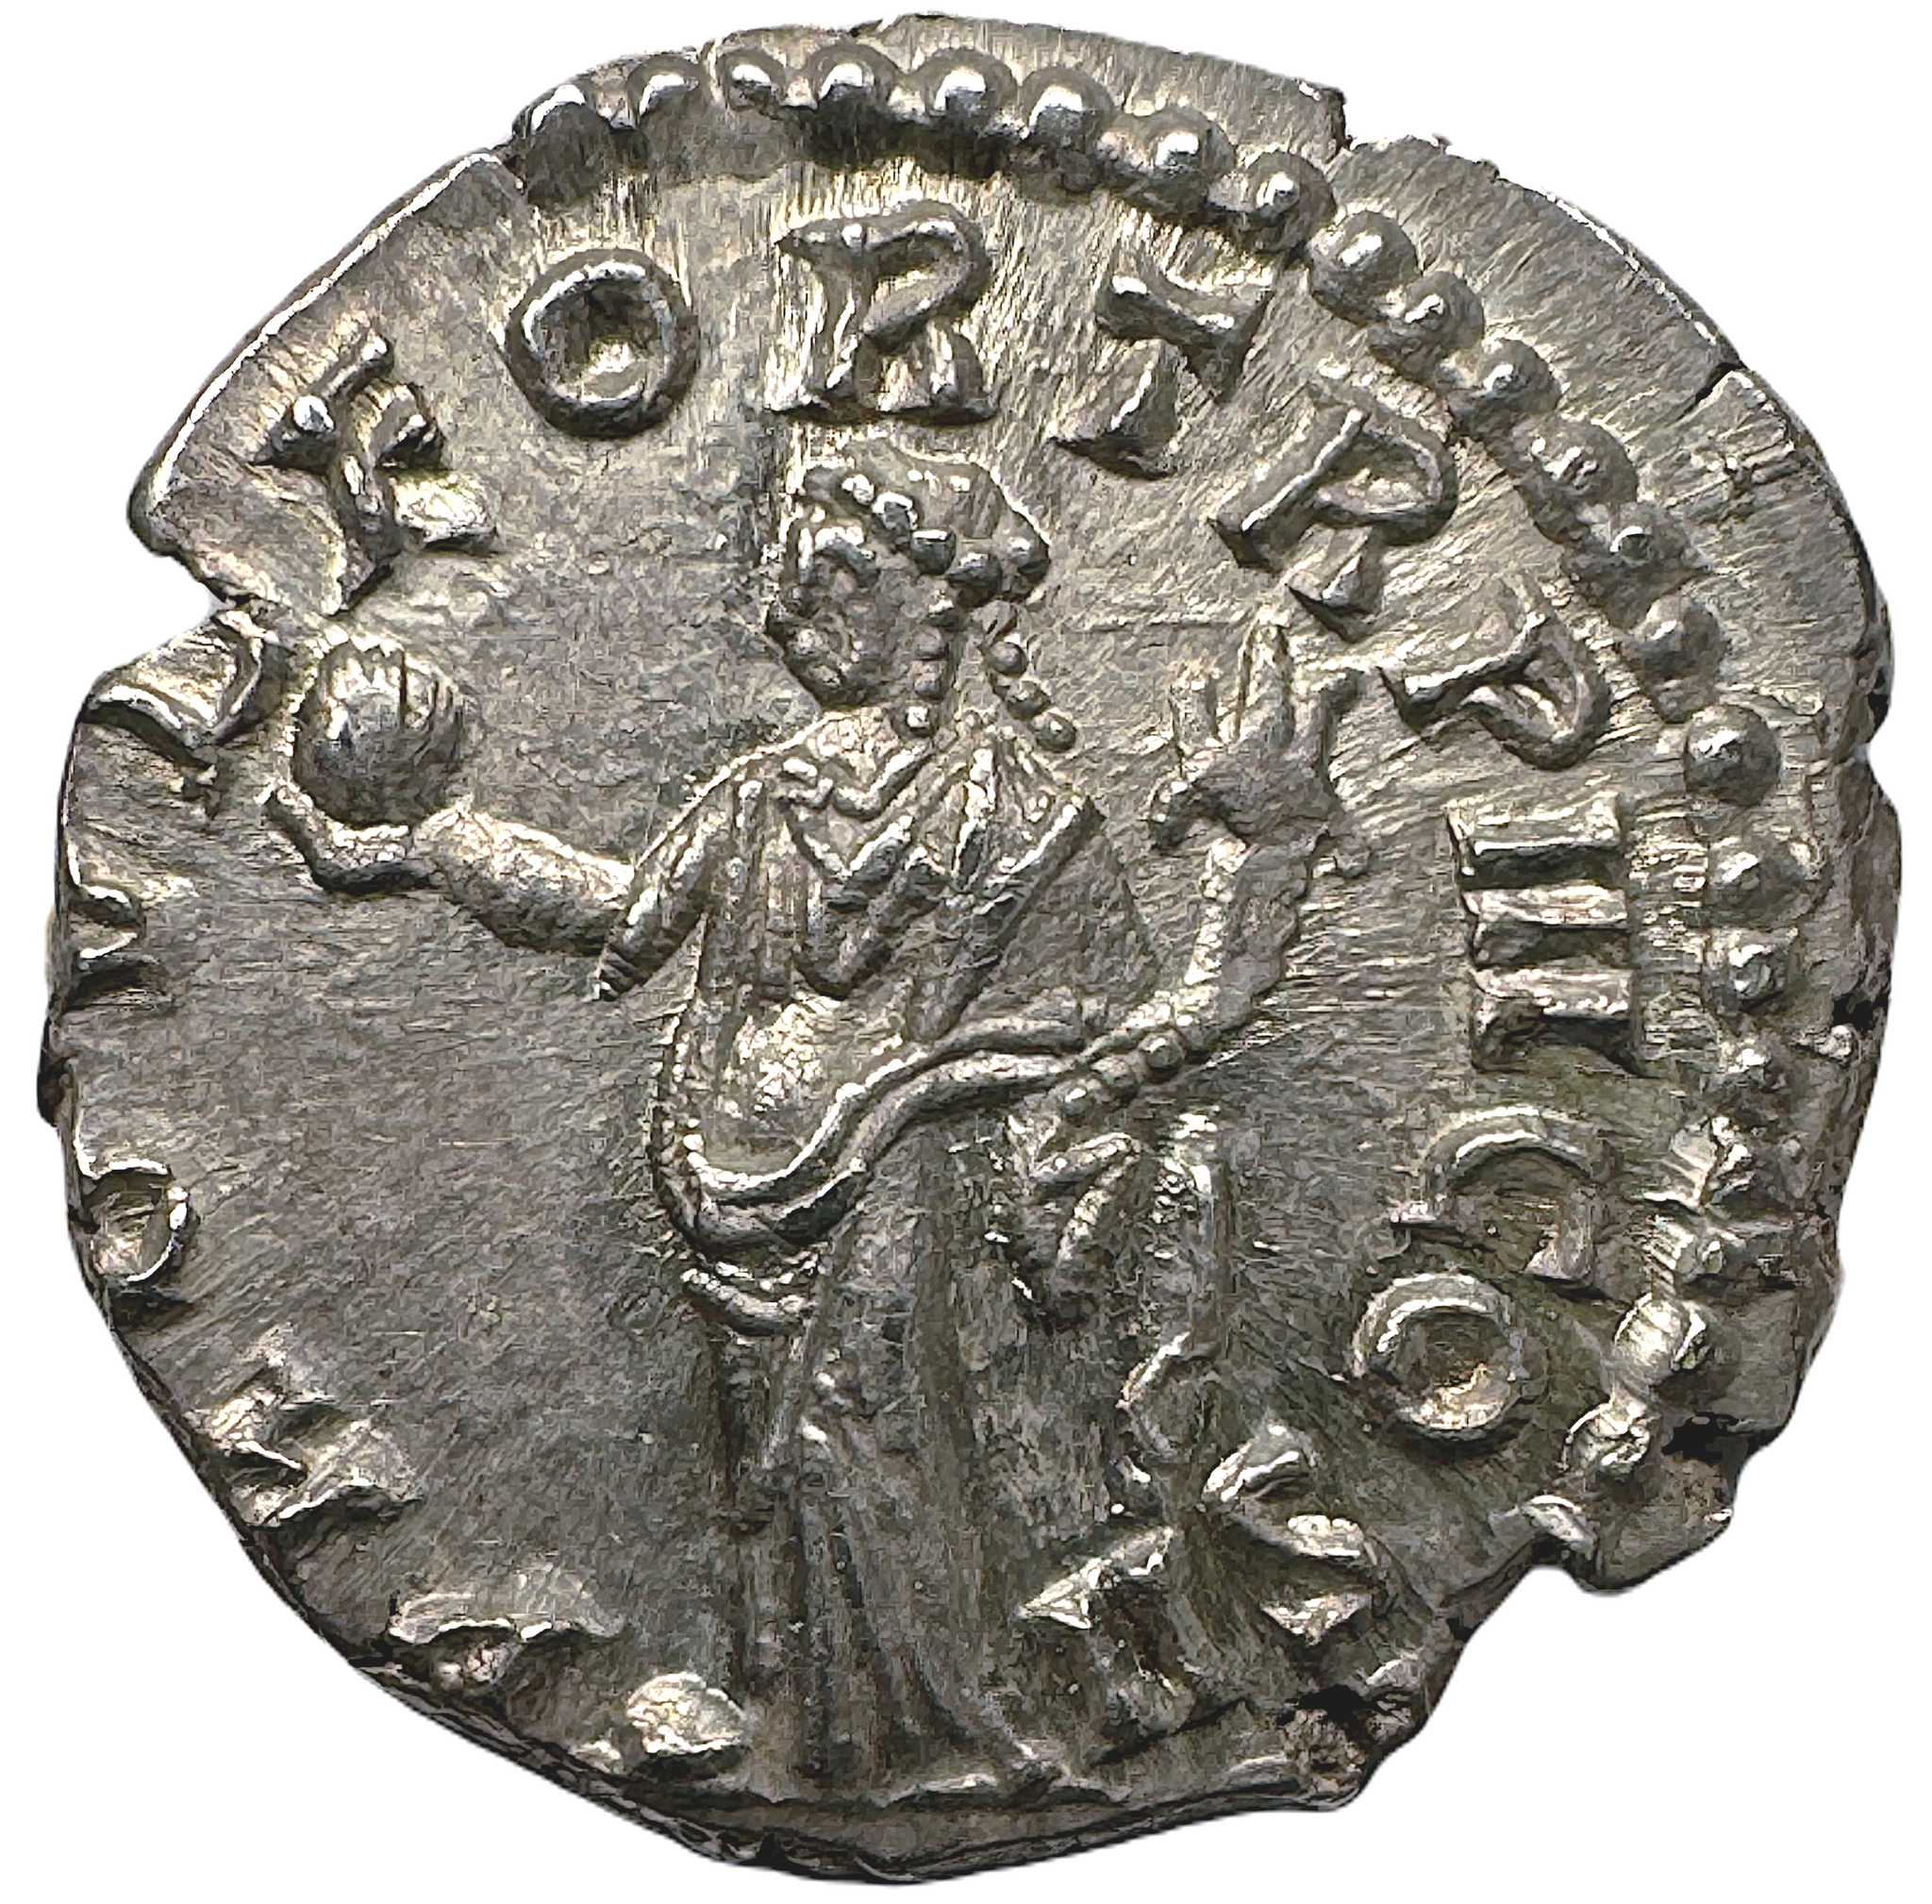 Lucius Verus 161-169 e.Kr - Denar - Vackert exemplar med Providentia